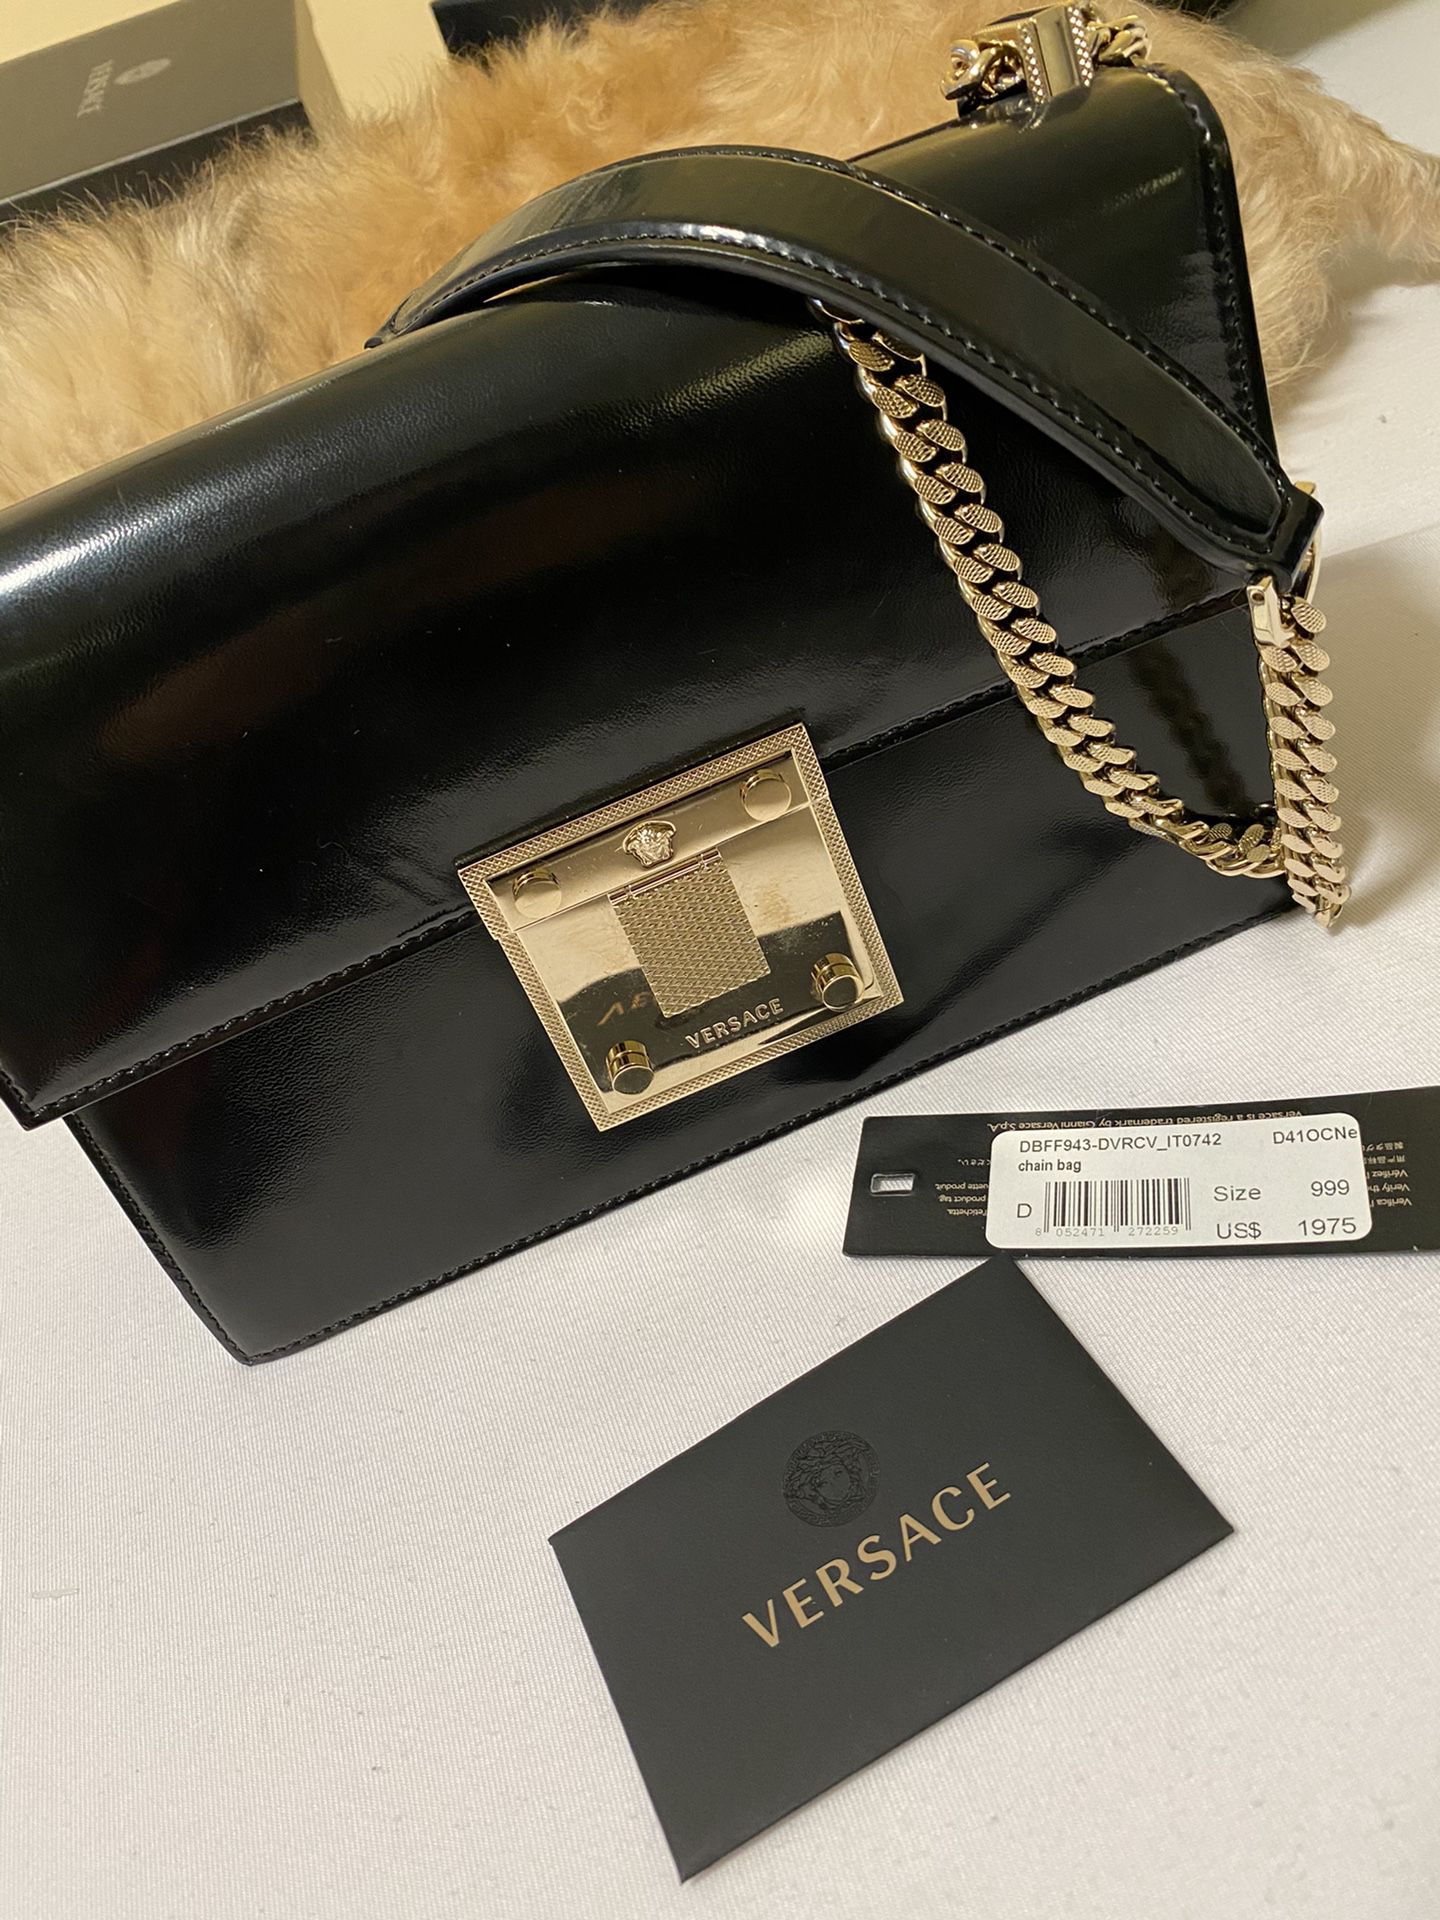 !MUST GO! Versace black purse 100% REAL (small/medium) used